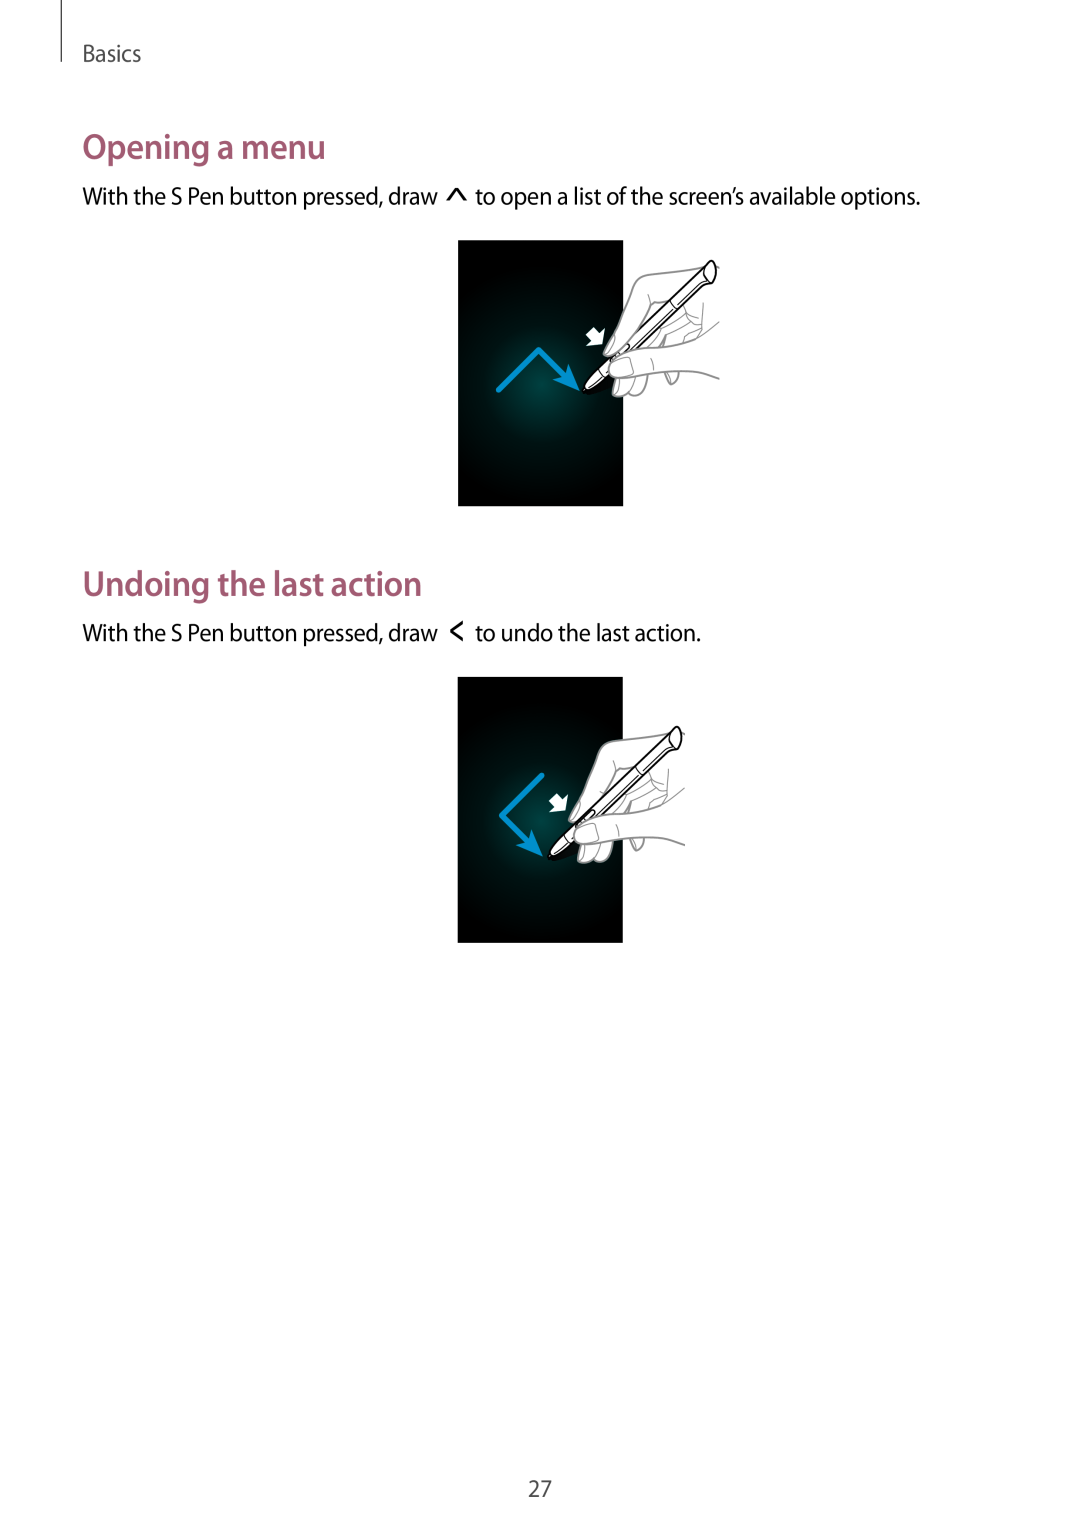 Samsung GT-N5100 user manual Opening a menu, Undoing the last action, Basics 